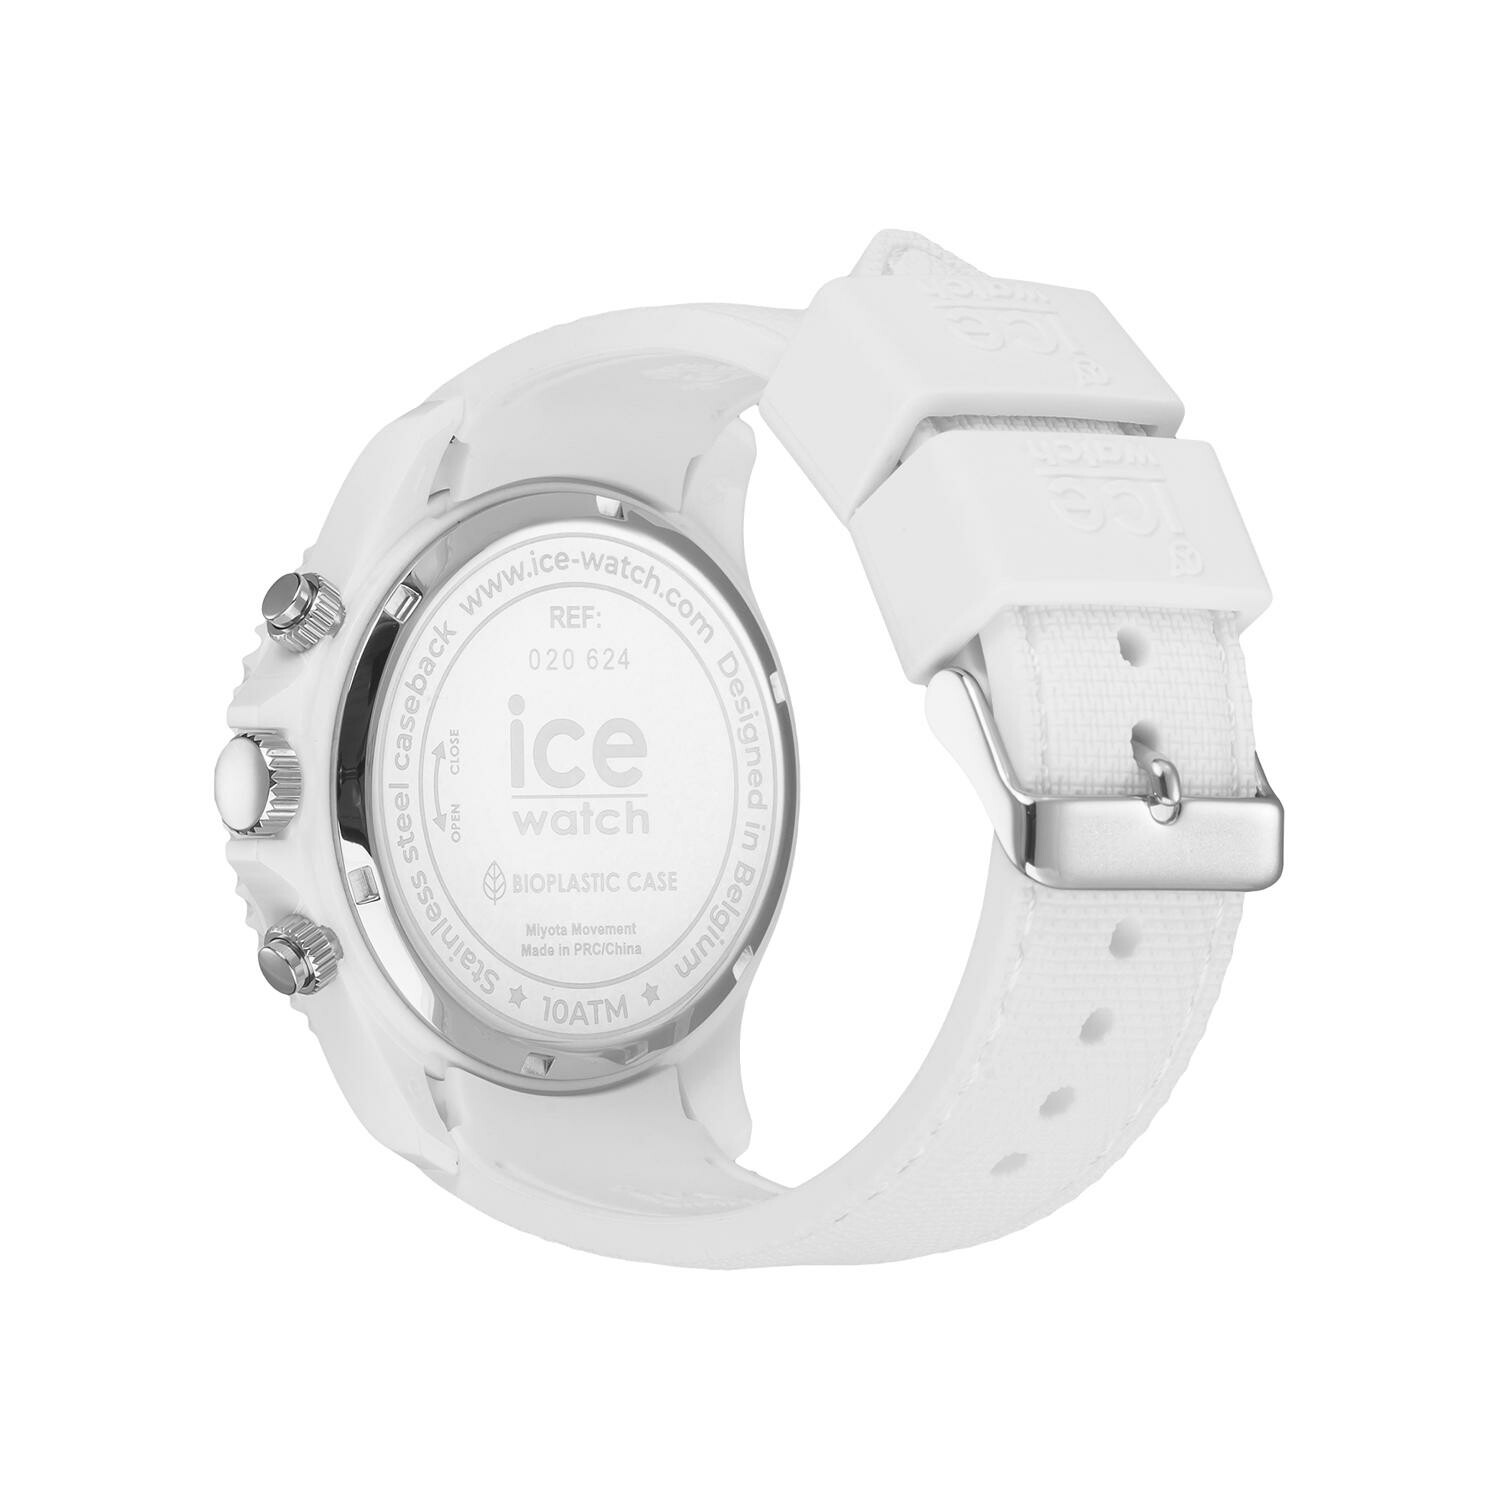 Achat Montre Ice-Watch chrono White 020624 ICE blue